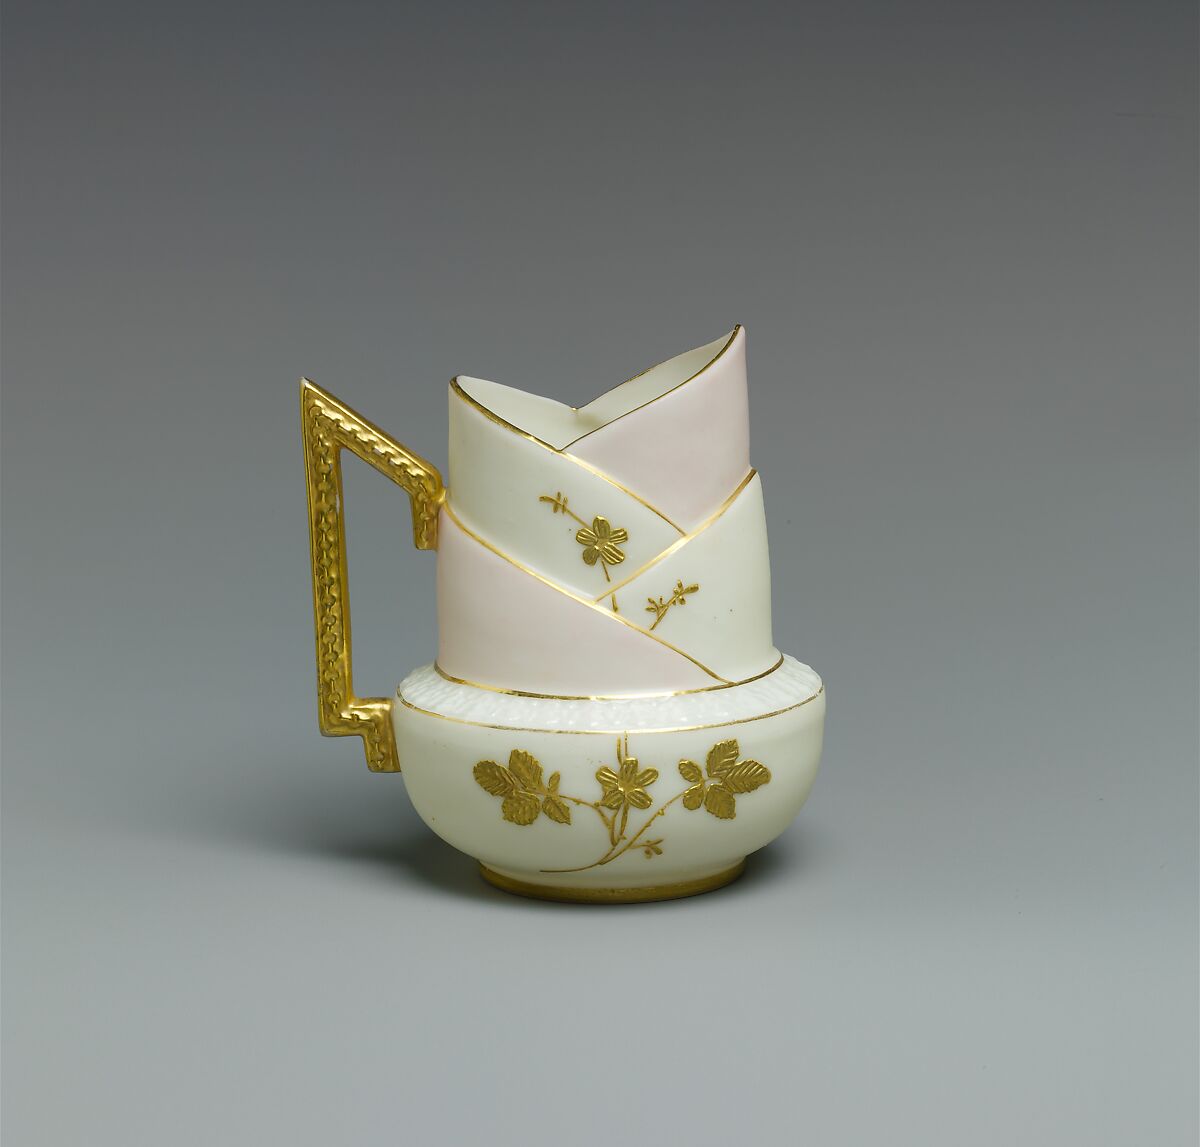 Pitcher, Ceramic Art Company, Trenton, New Jersey (American, 1889–1896), Belleek porcelain, with overglaze enamel decoration and gilding, American 